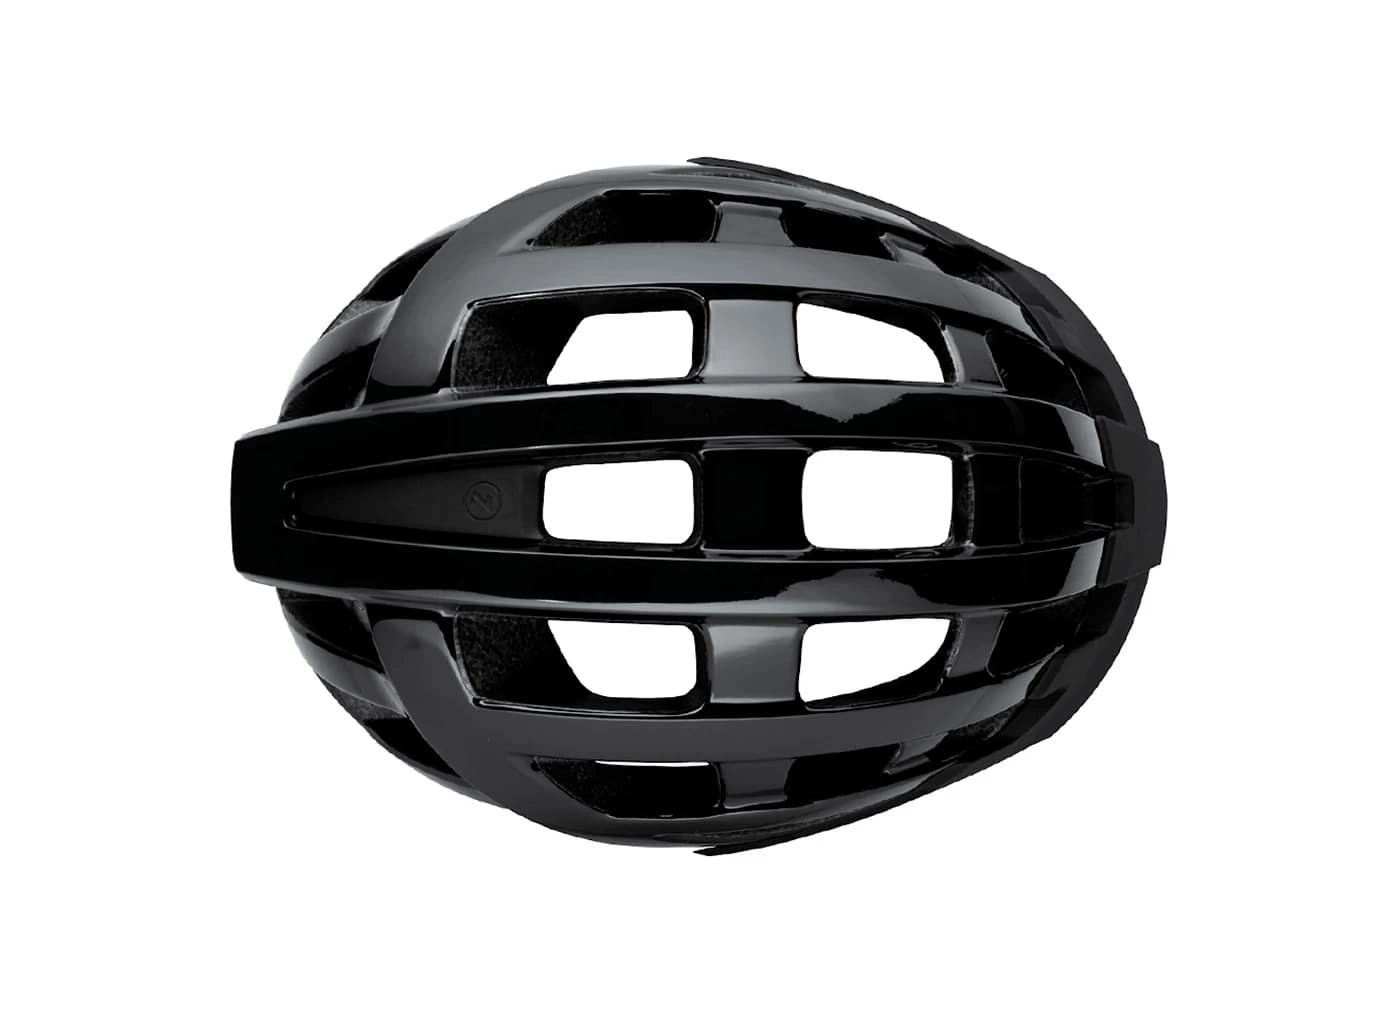 Lazer Compact helmet black